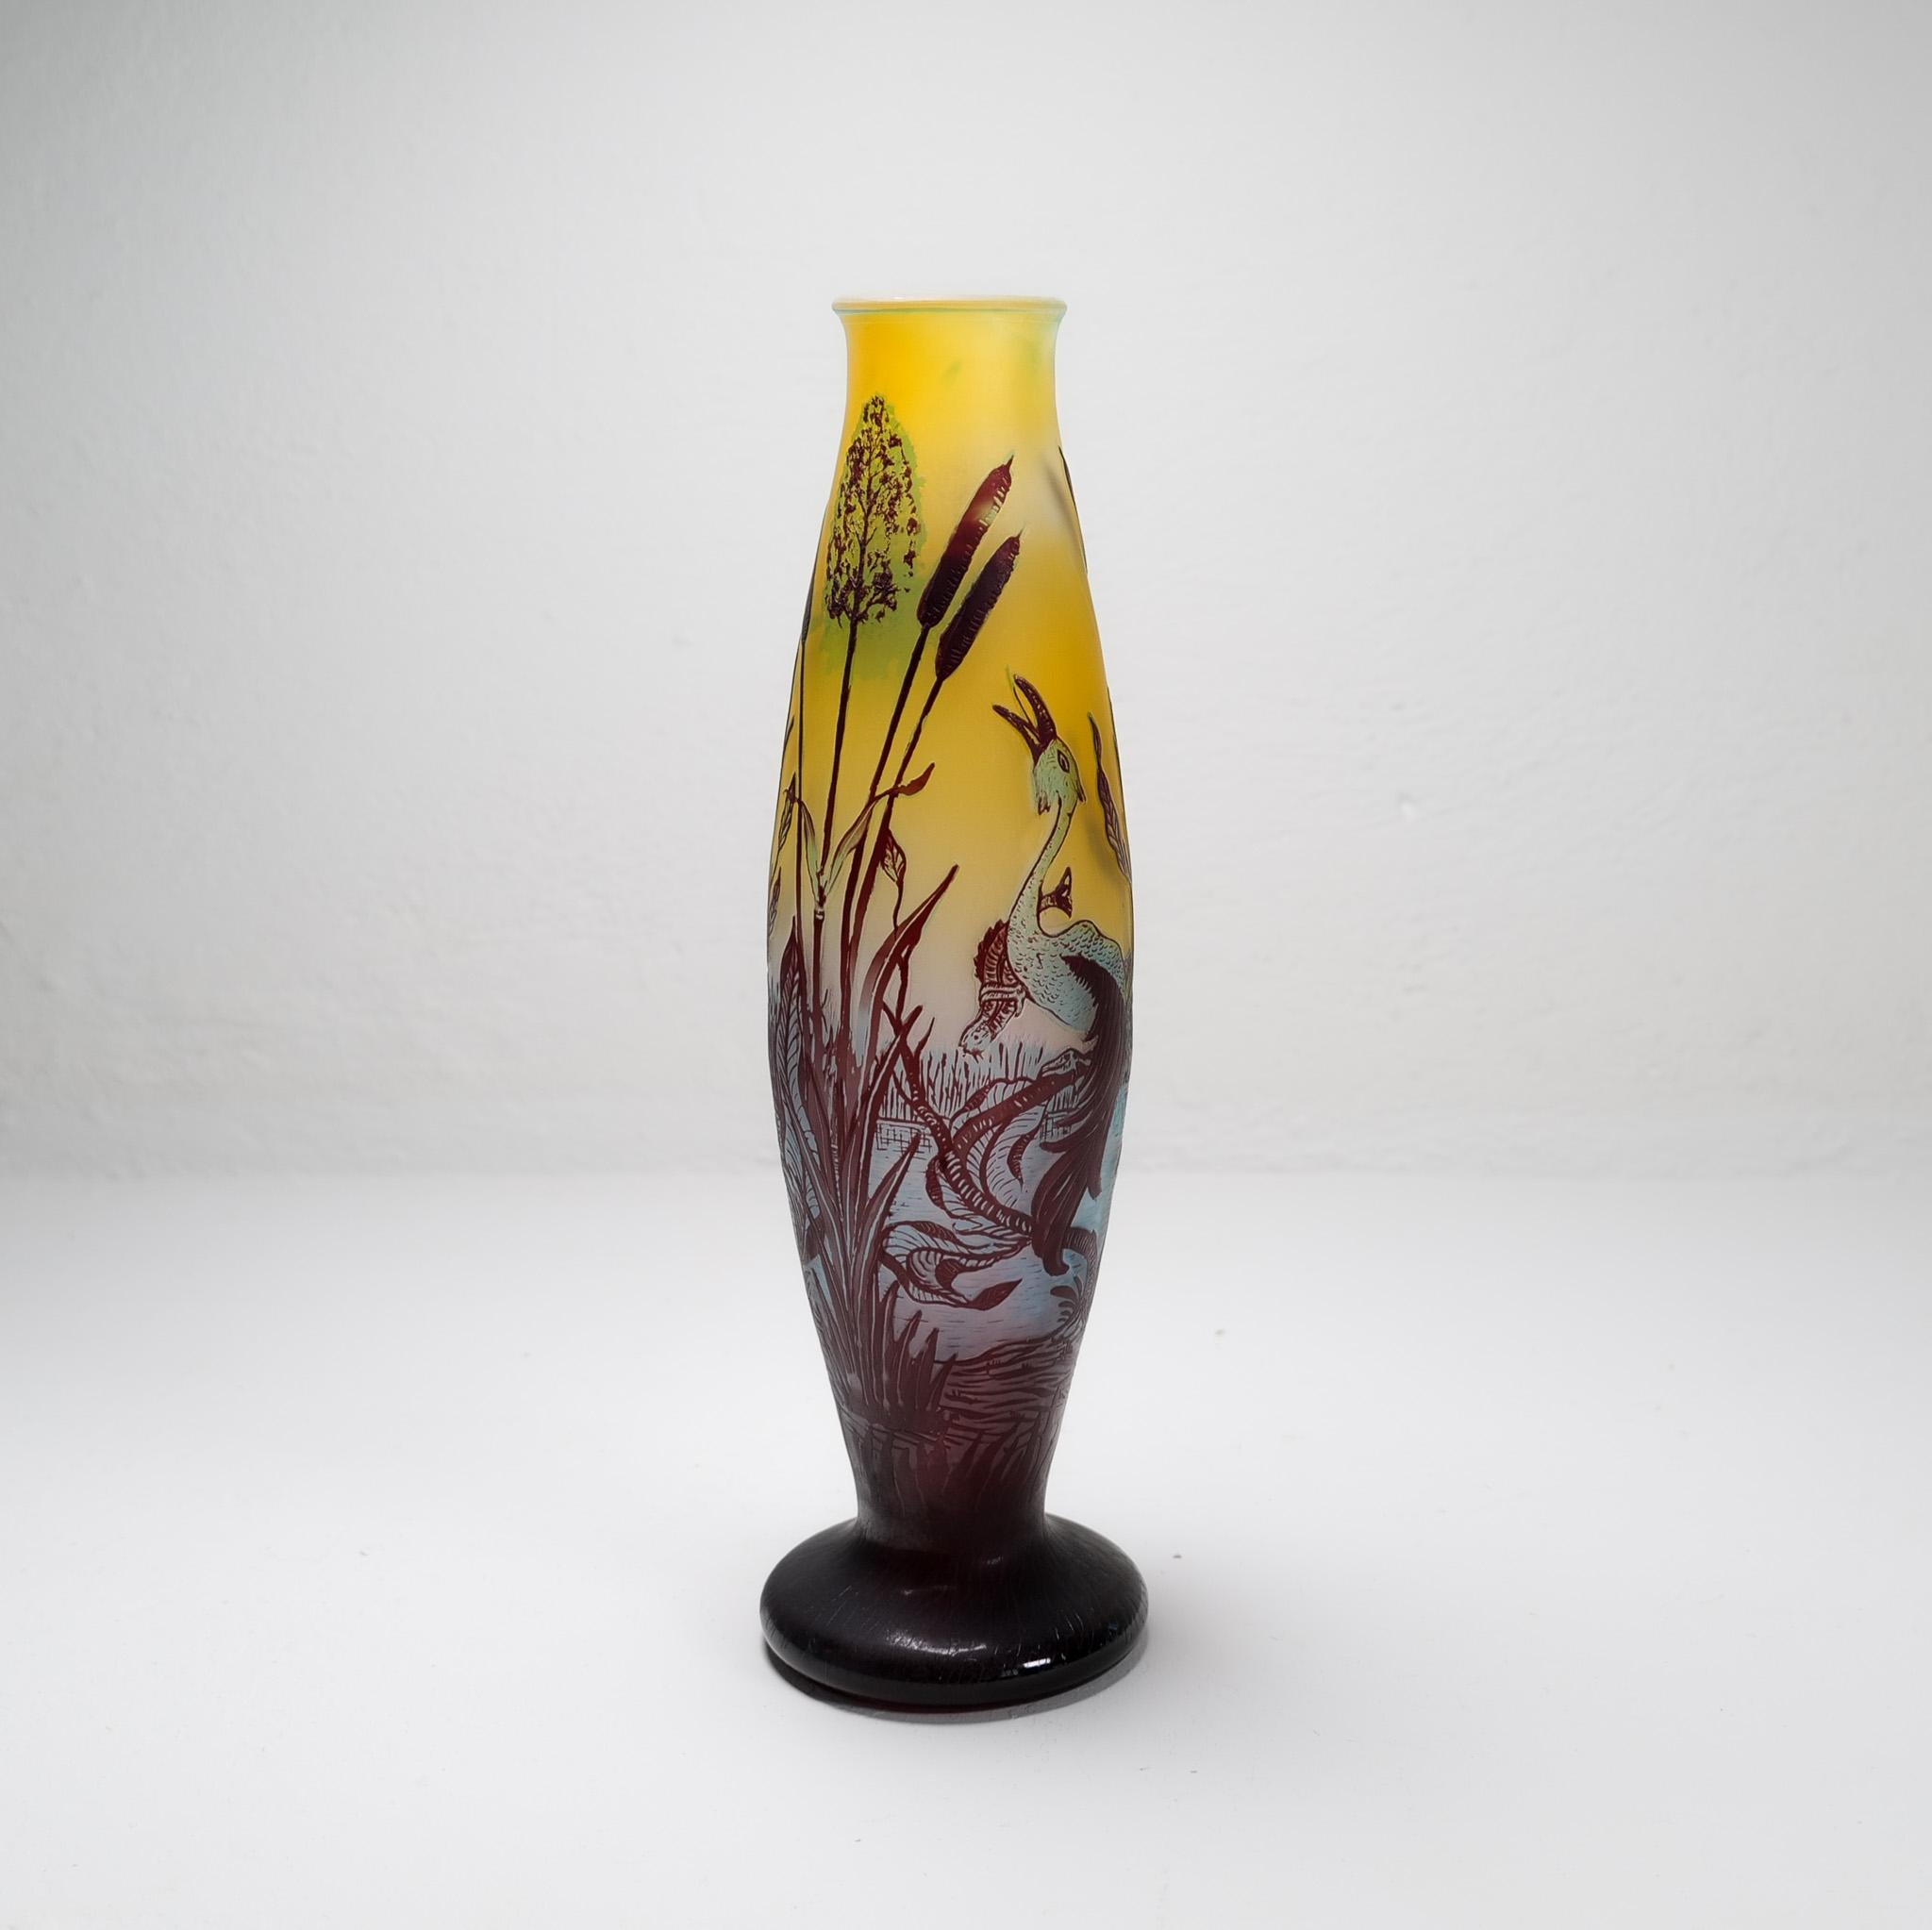 Dekorative Jugendstil-Vase aus geschnitztem Glas, Schweden, 1900er Jahre (Art nouveau) im Angebot